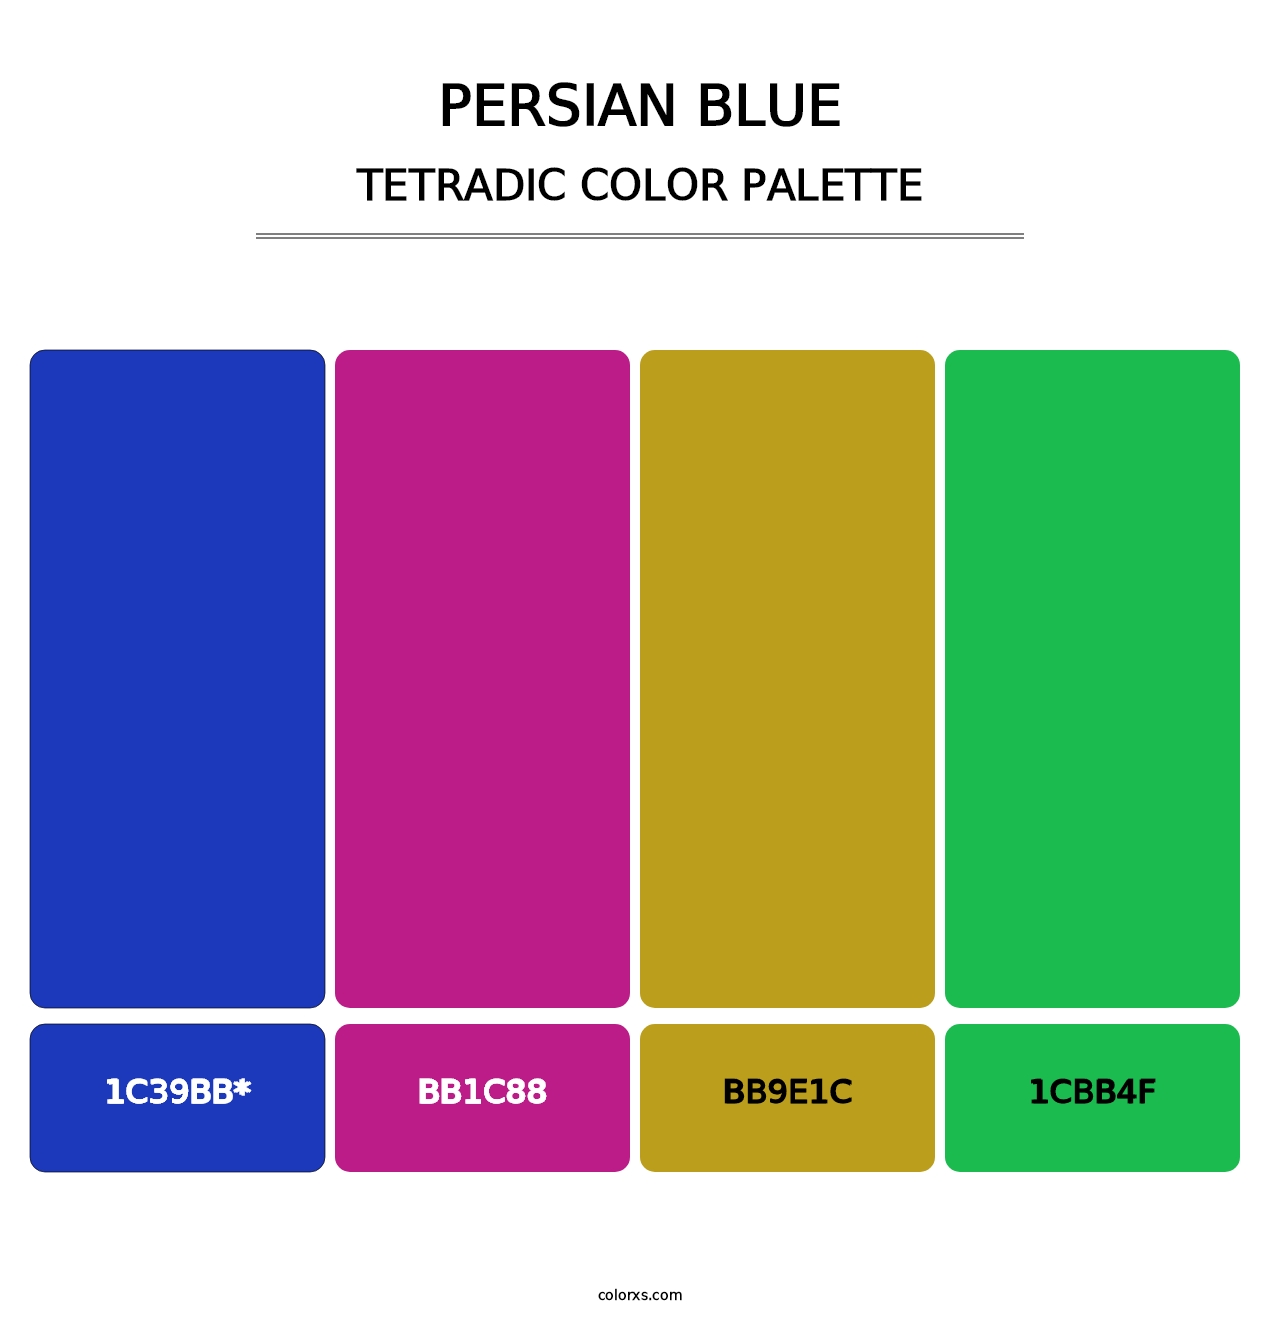 Persian Blue - Tetradic Color Palette